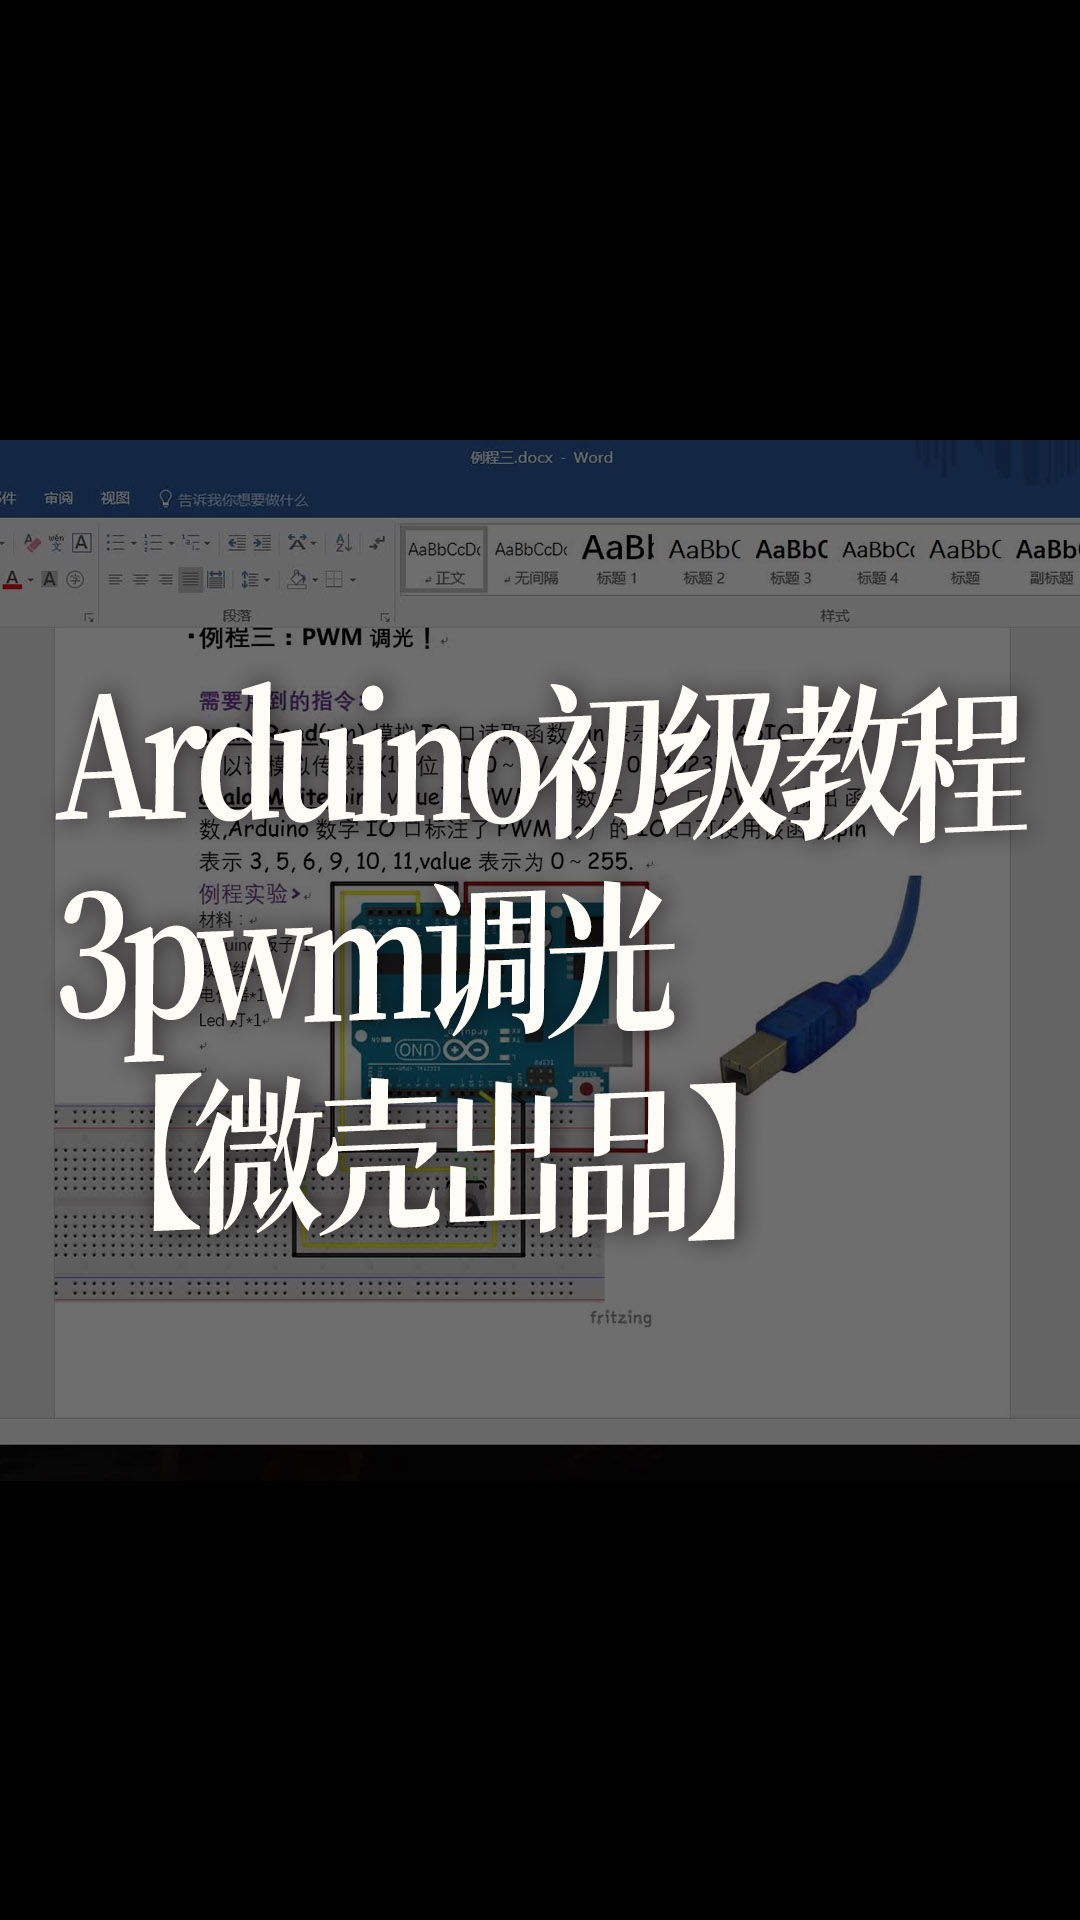 Arduino初级教程3pwm调光【微壳出品】 - 1-课程3pwm调光